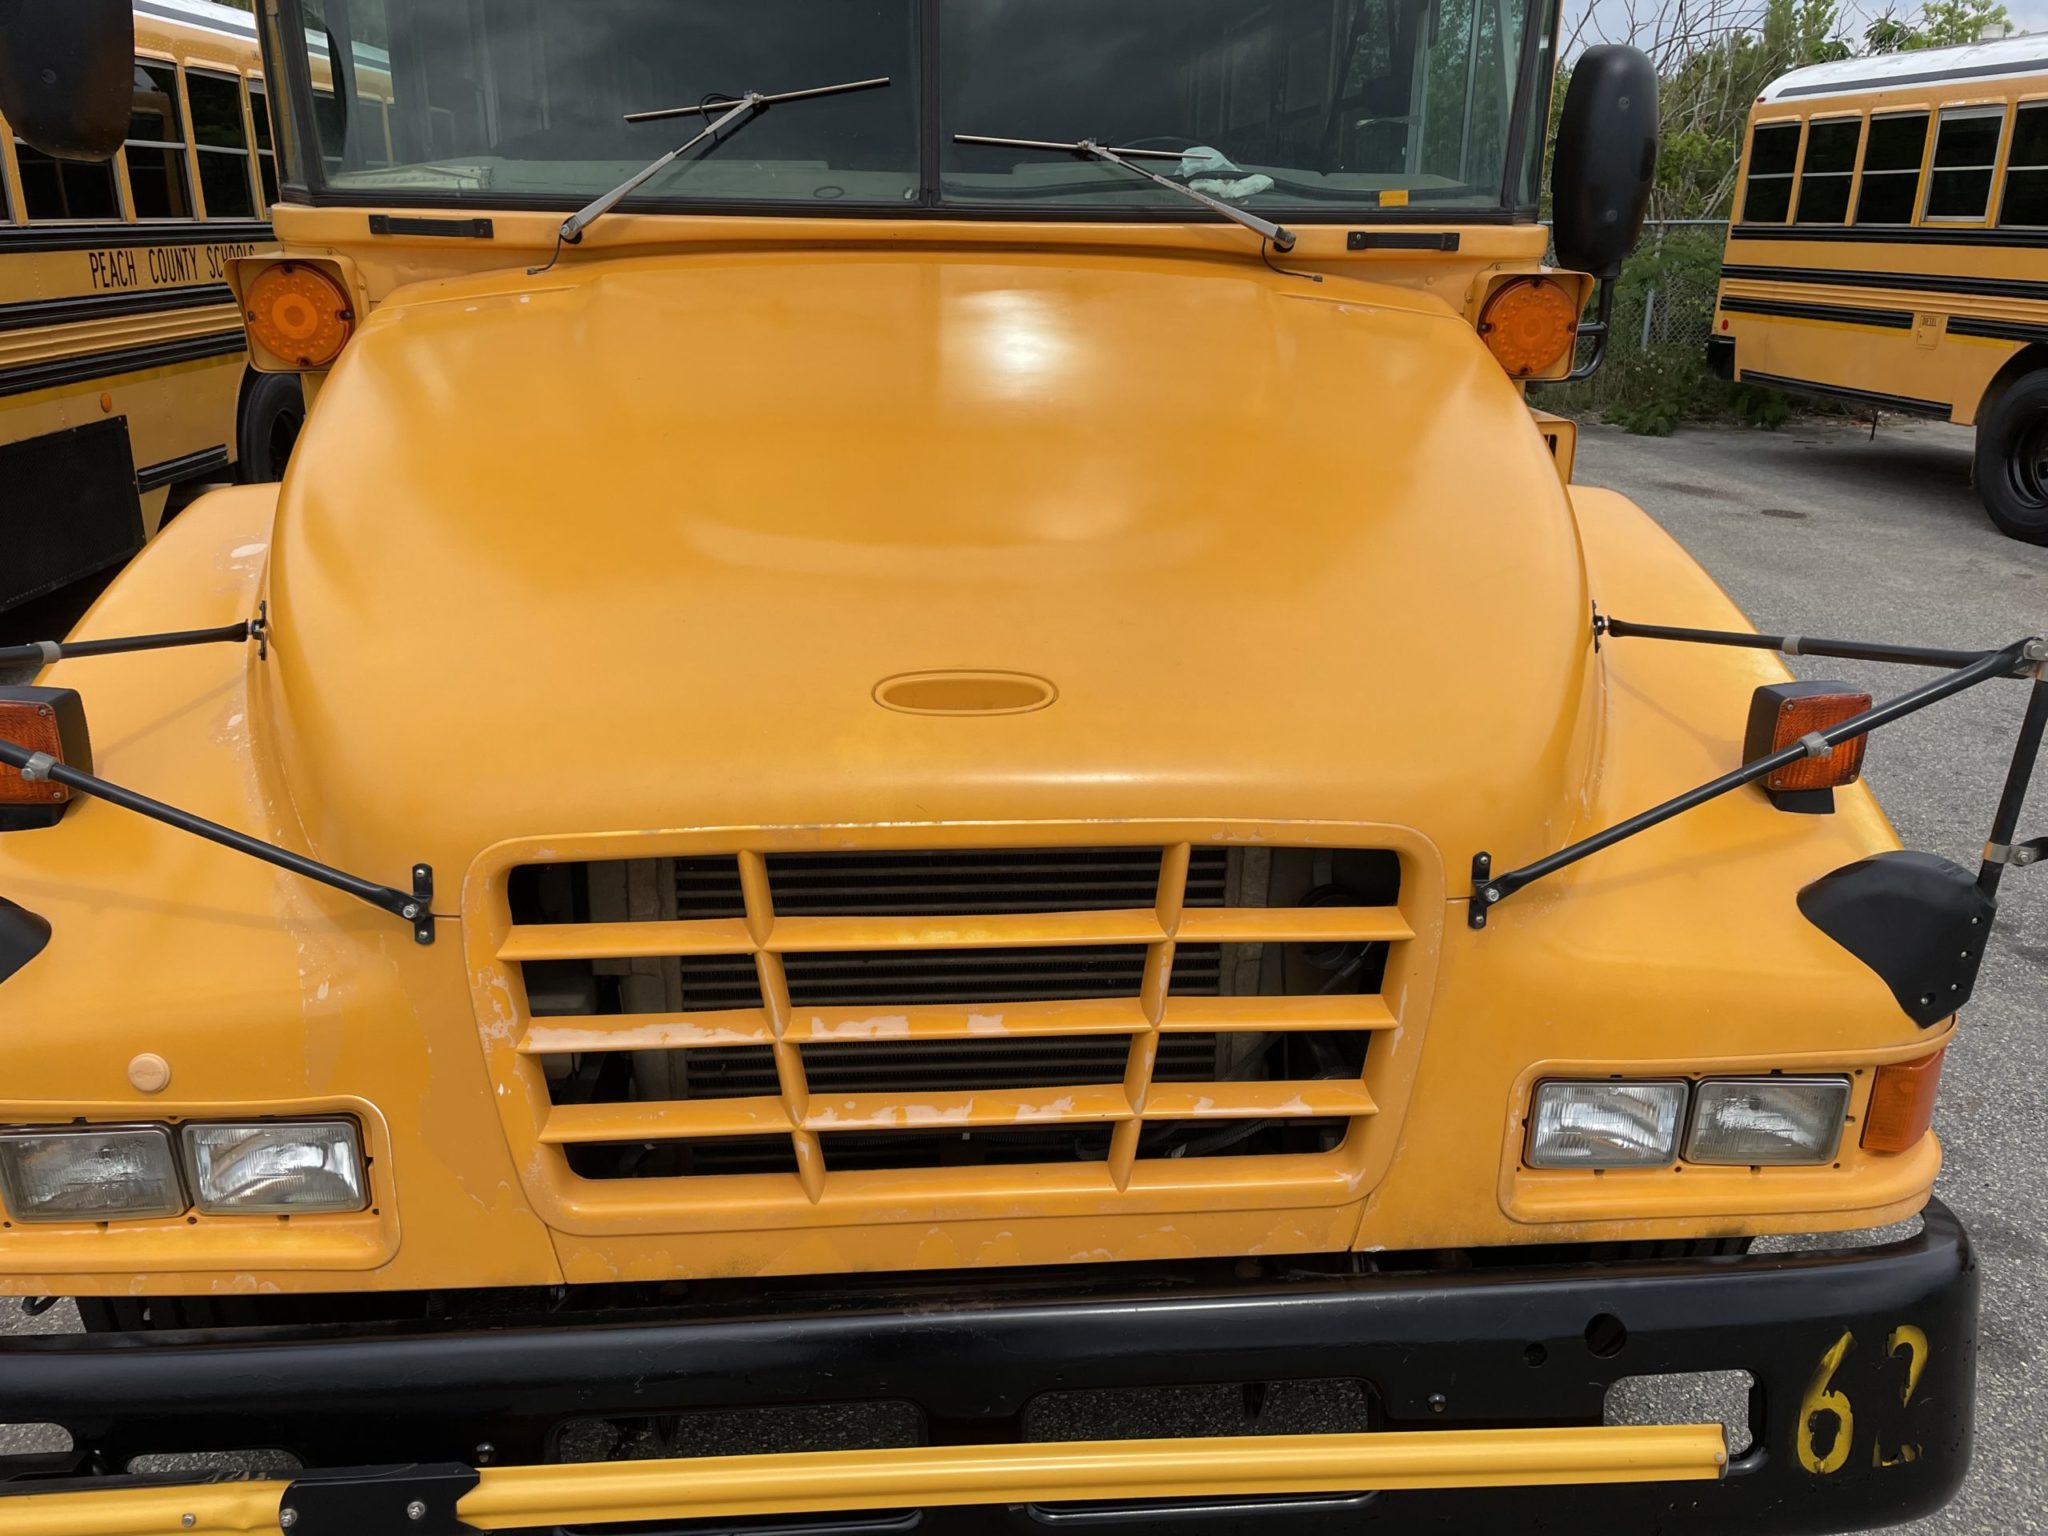 hood of treated school bus